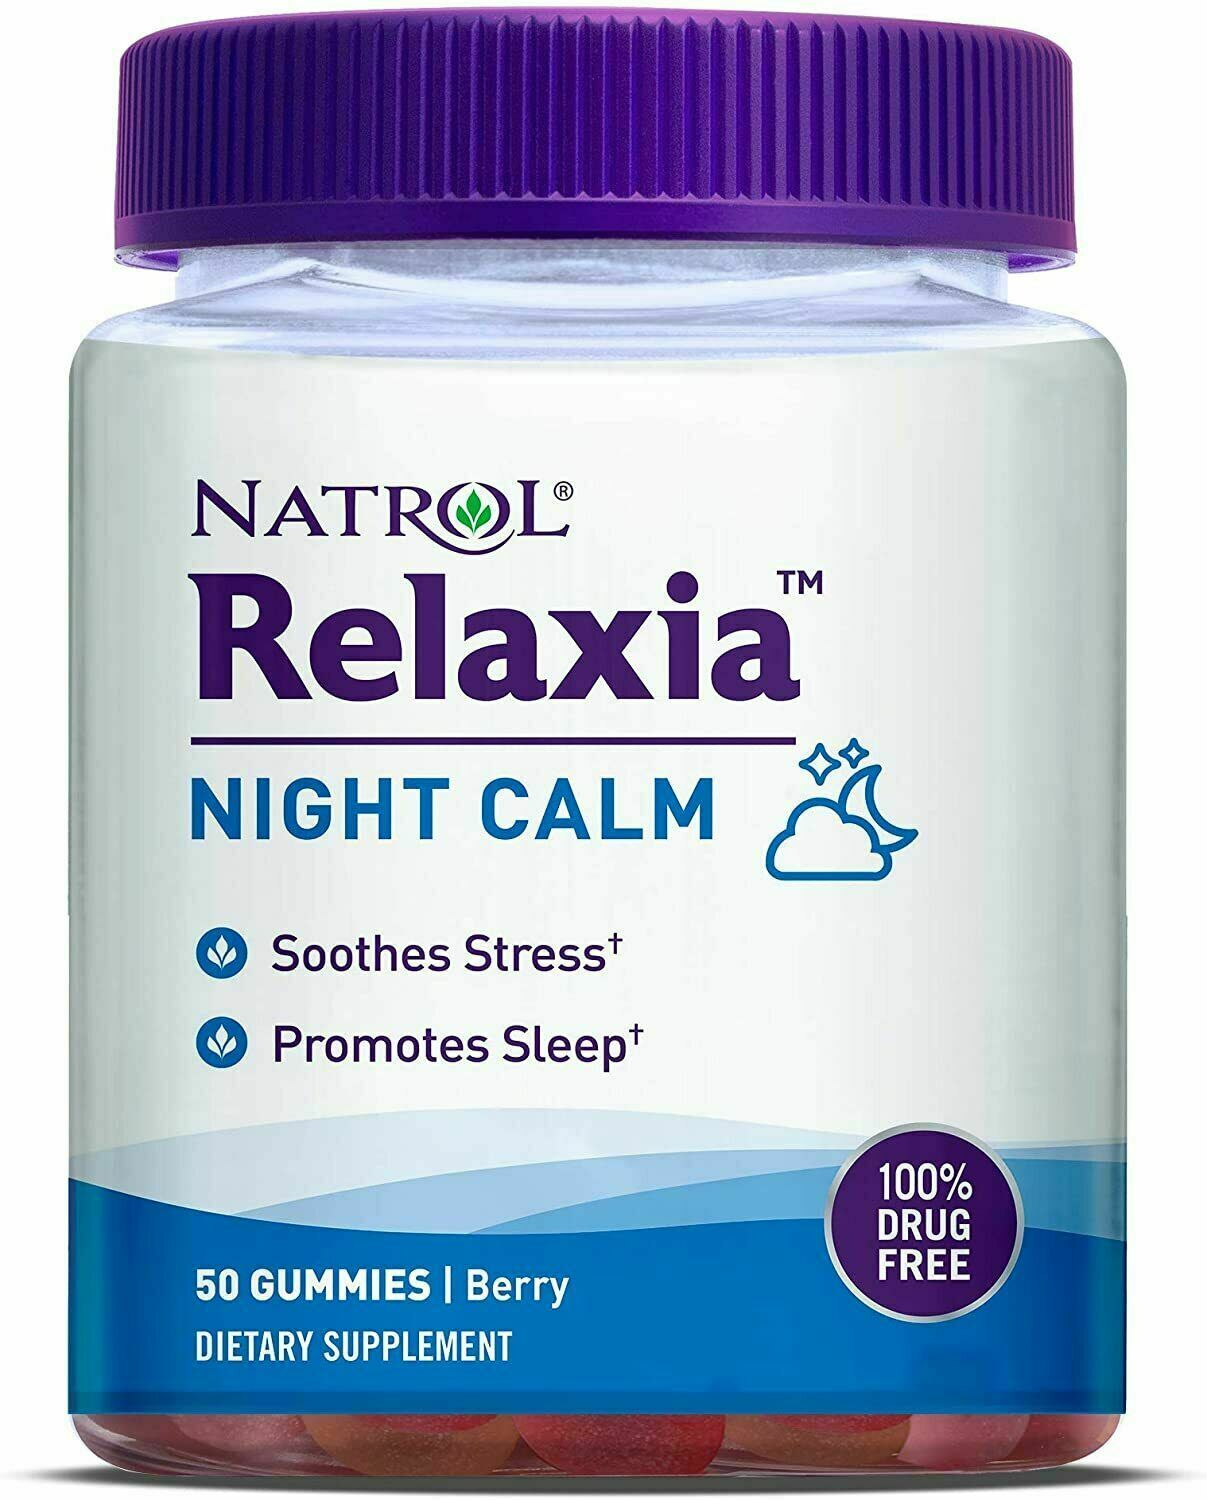 Natrol Relaxia Night Calm 50 Gummies Berry Flavor Melatonin 5HTP 100% Drug Free